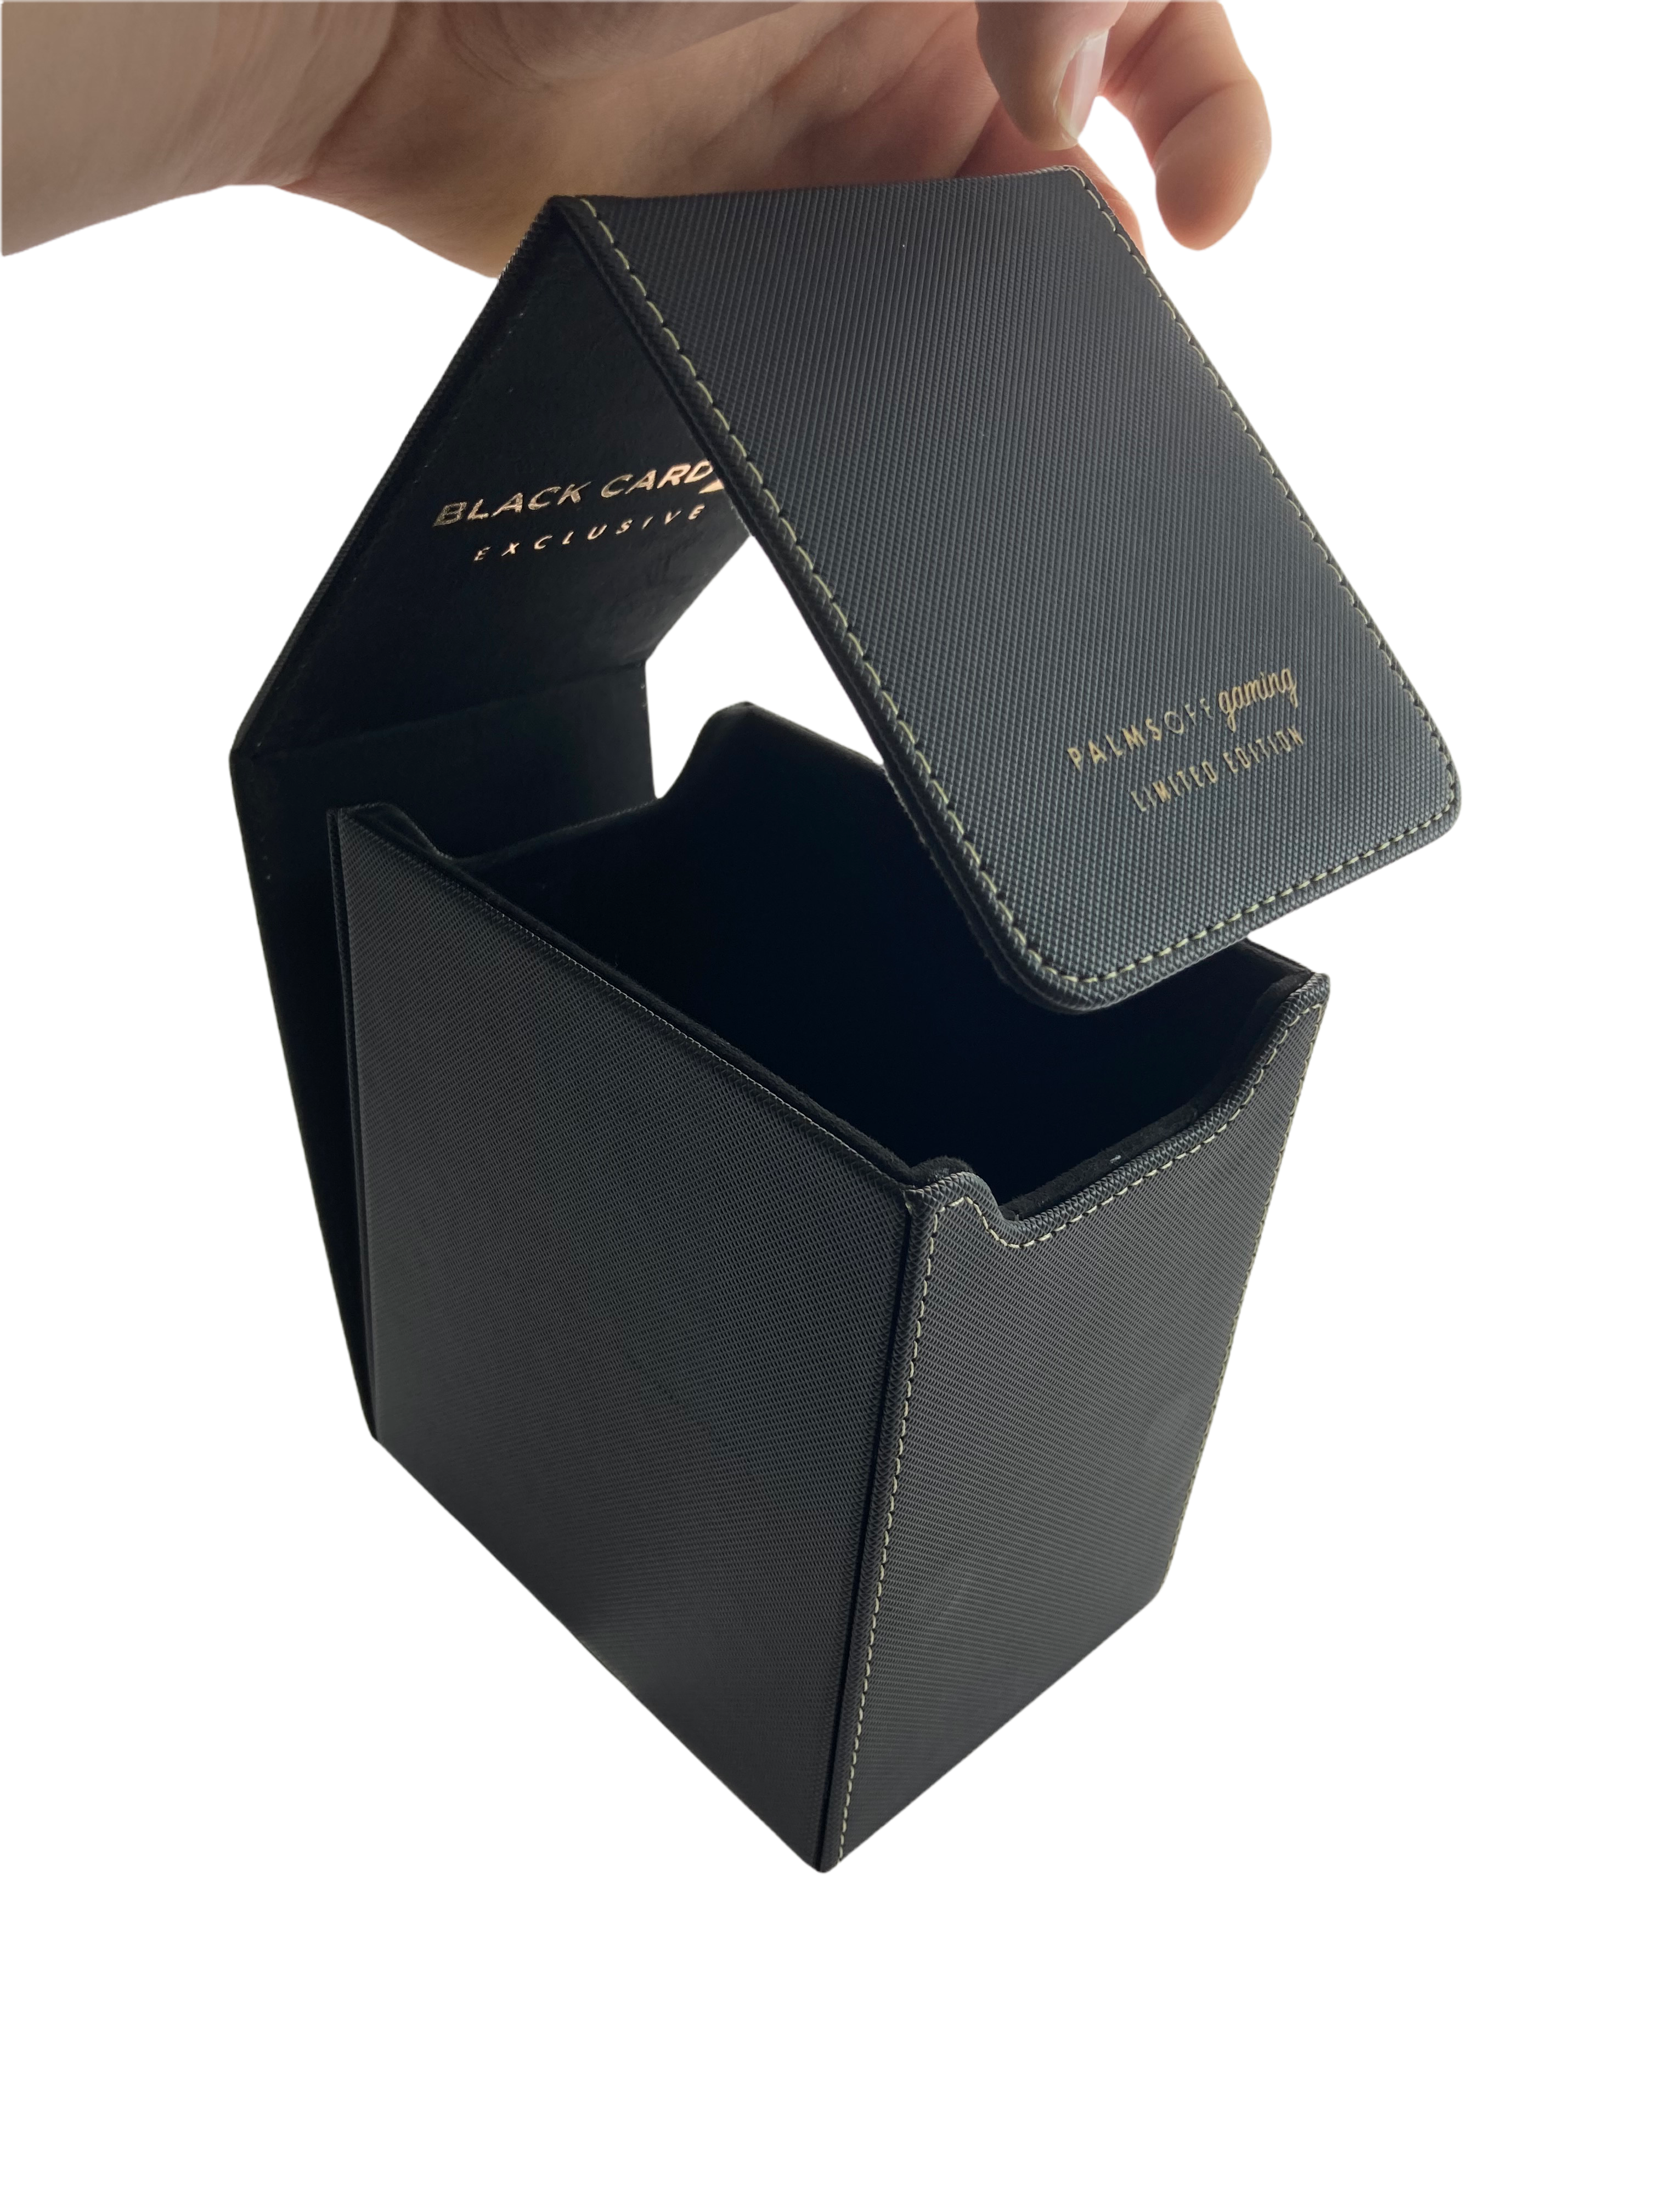 Collectors Series High-Class PSA Storage Case (Single Row) (Black Card X Exclusive)